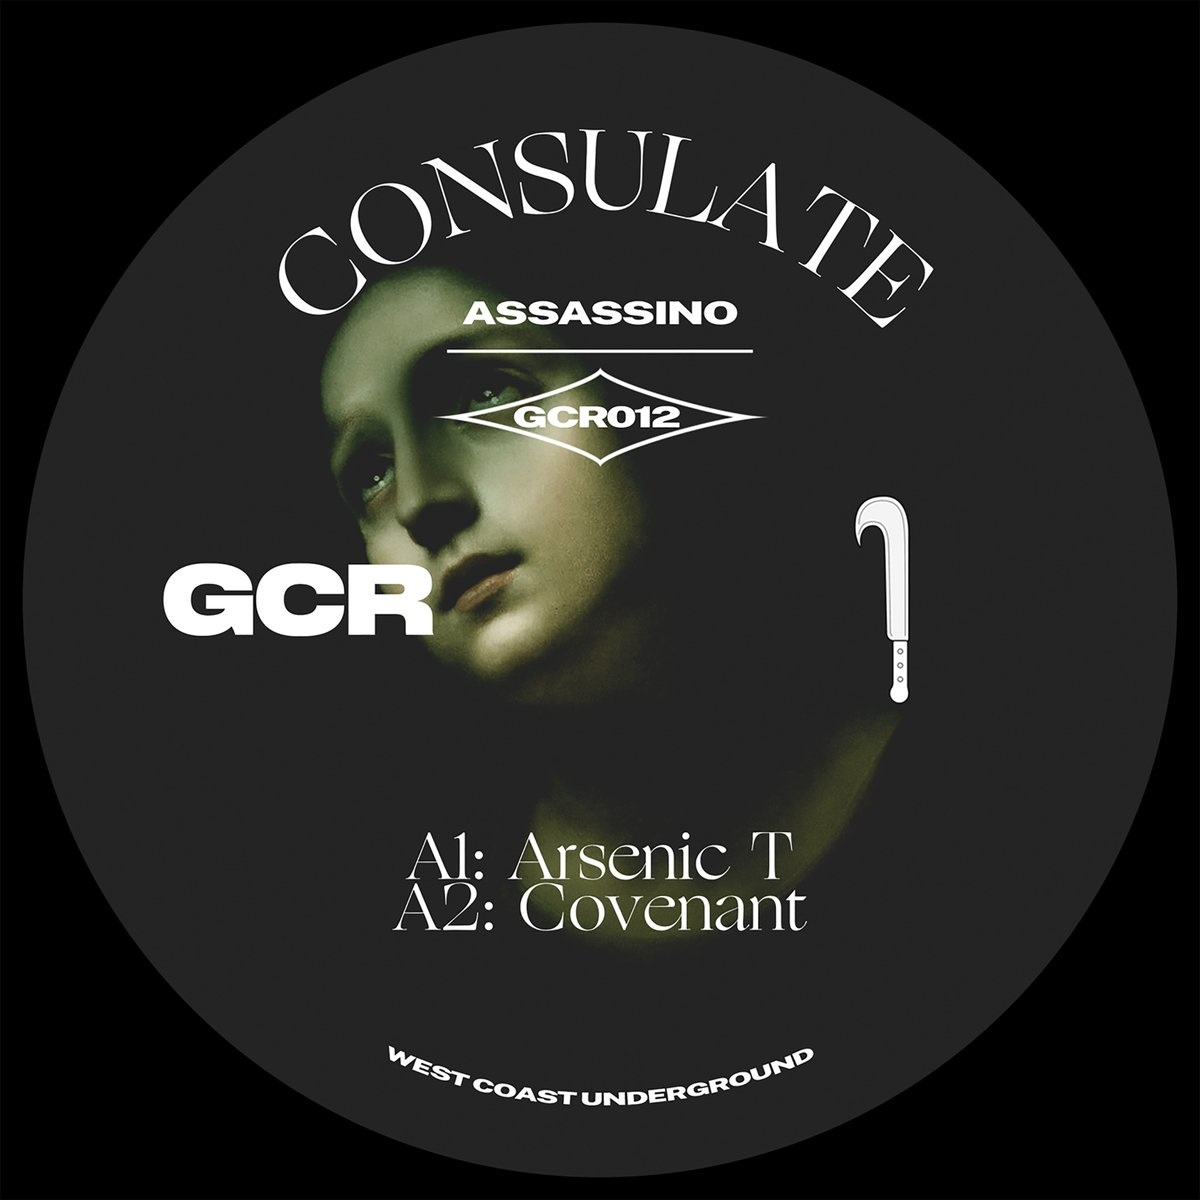 image cover: Consulate - Assassino /